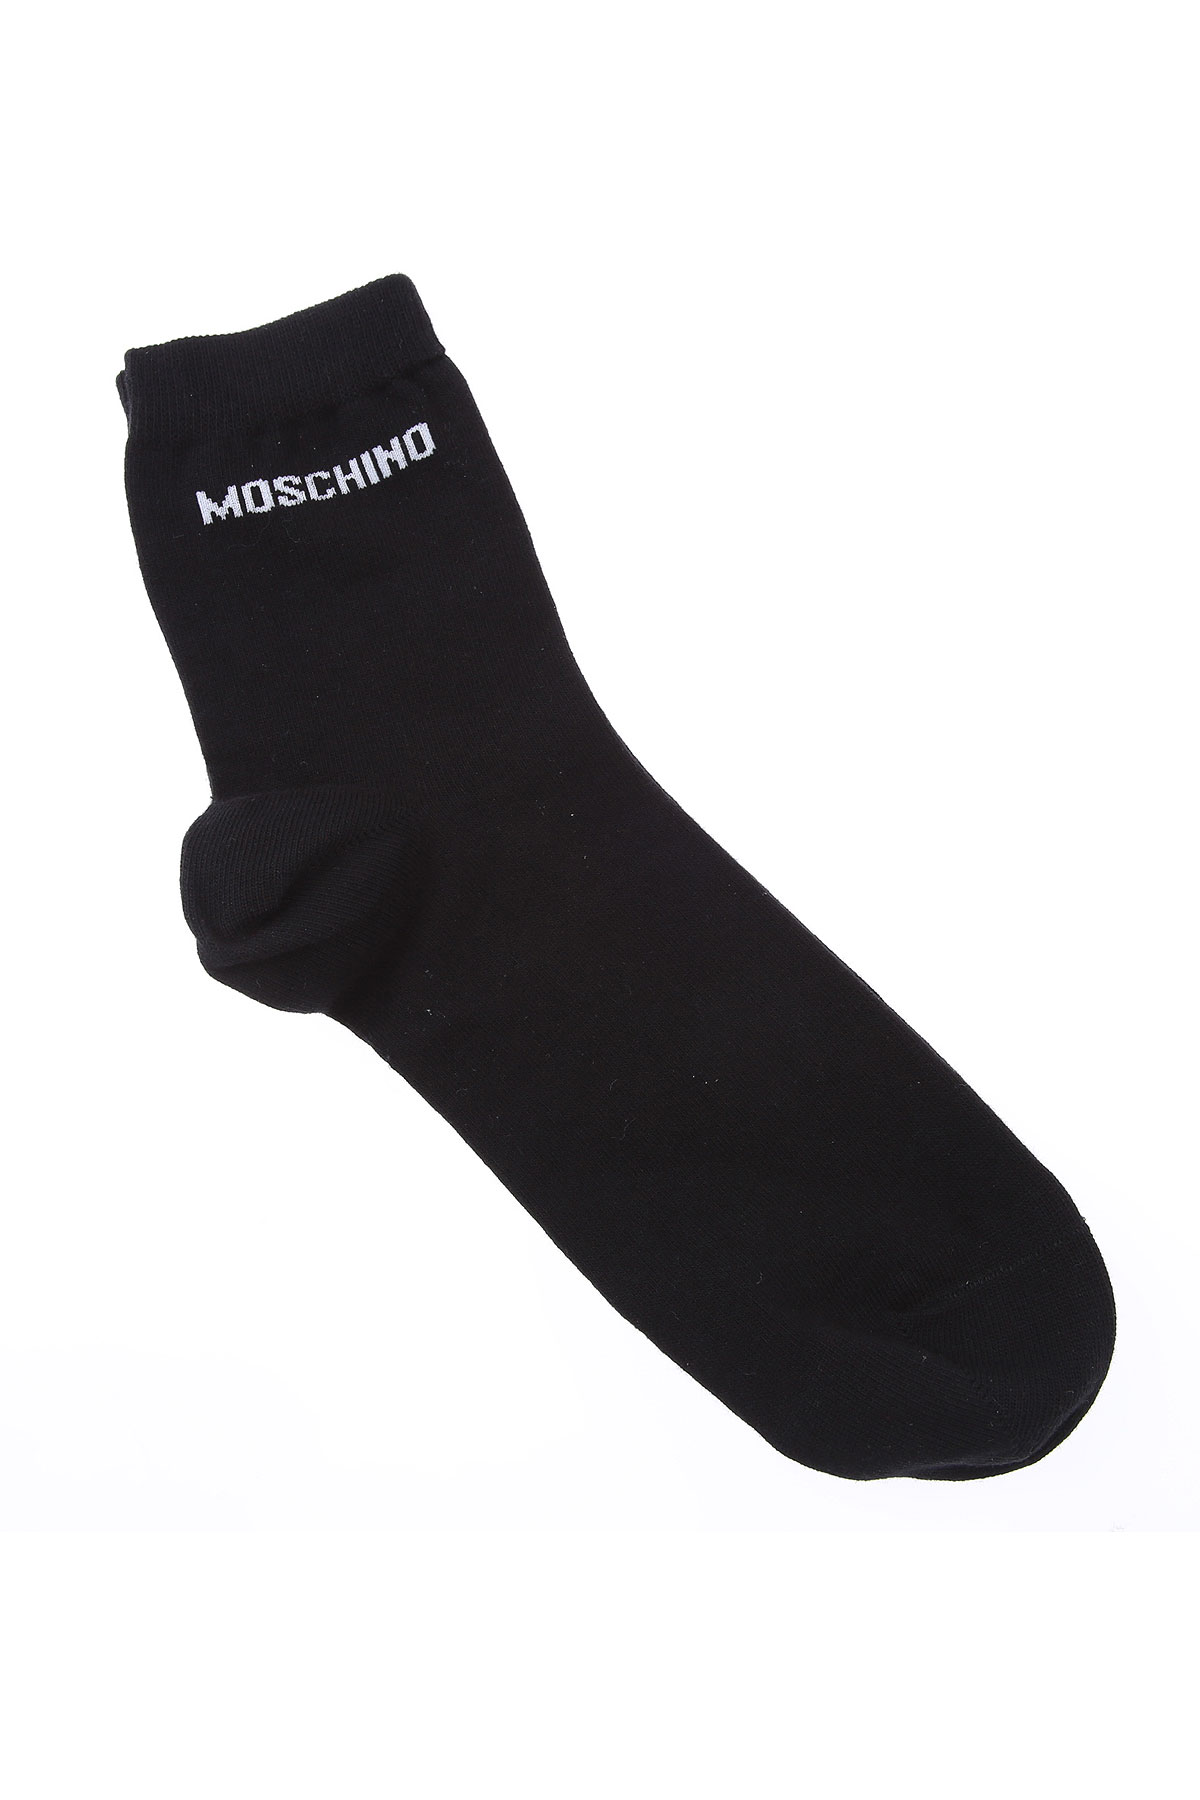 moschino mens socks